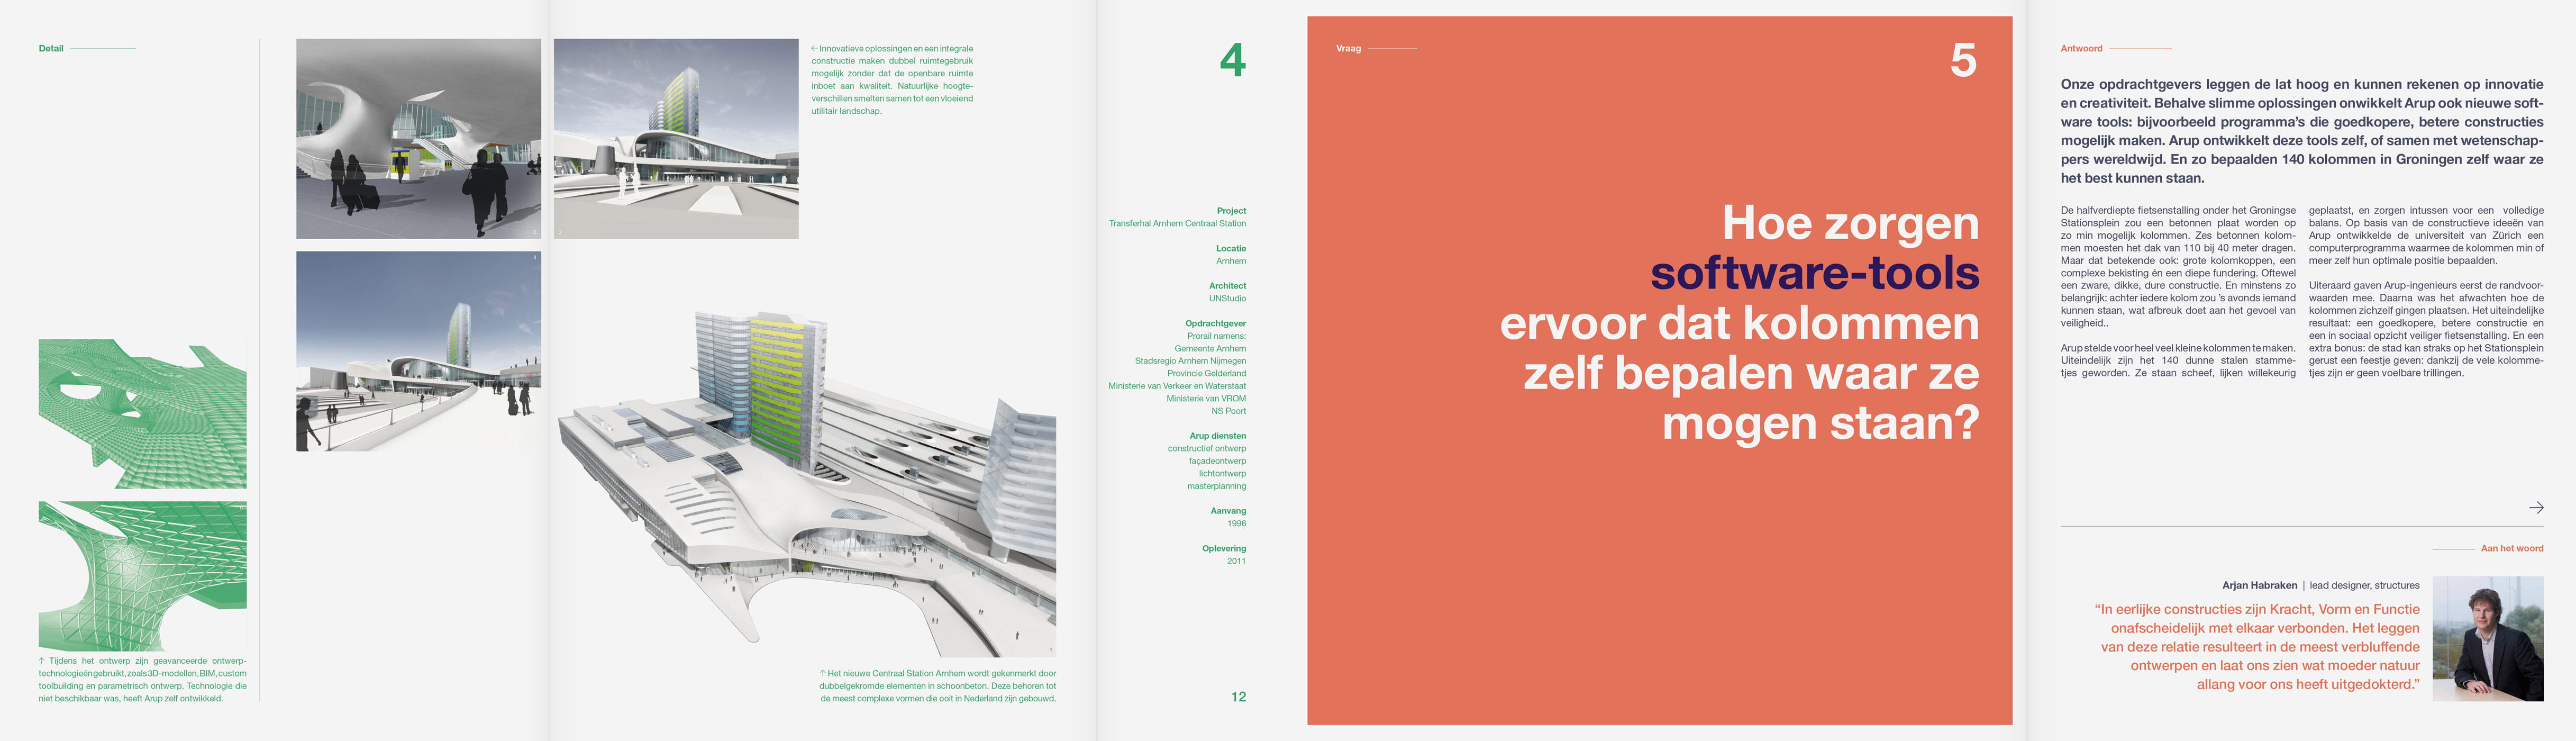 Arup, architecture, graphic design, brochure, concept, art direction